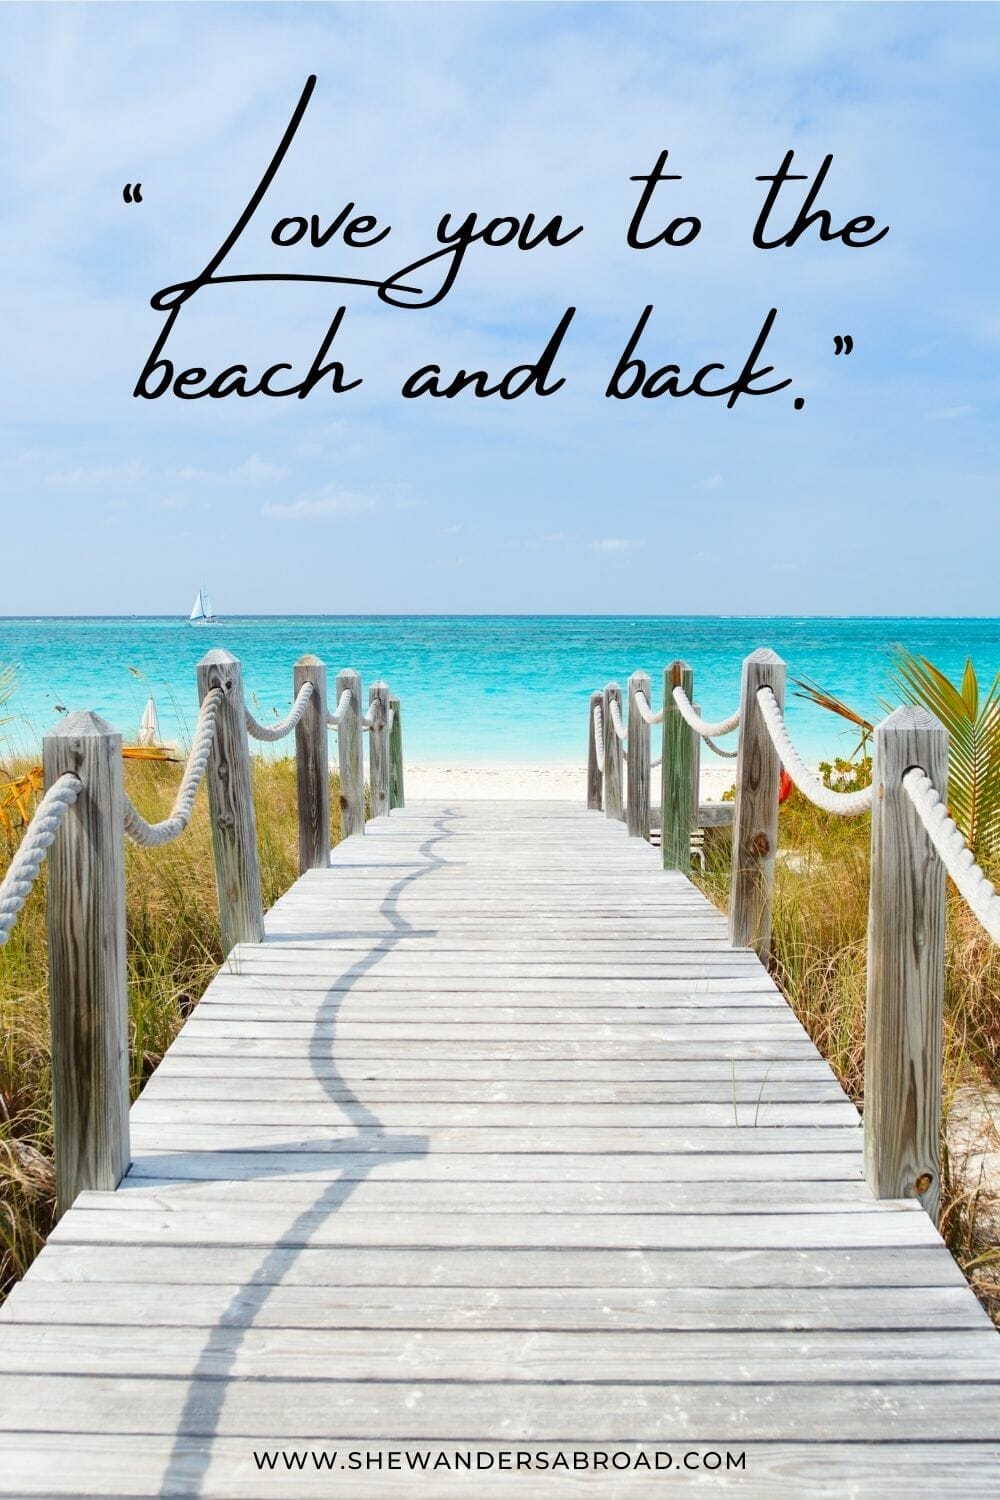 Romantic beach love quotes